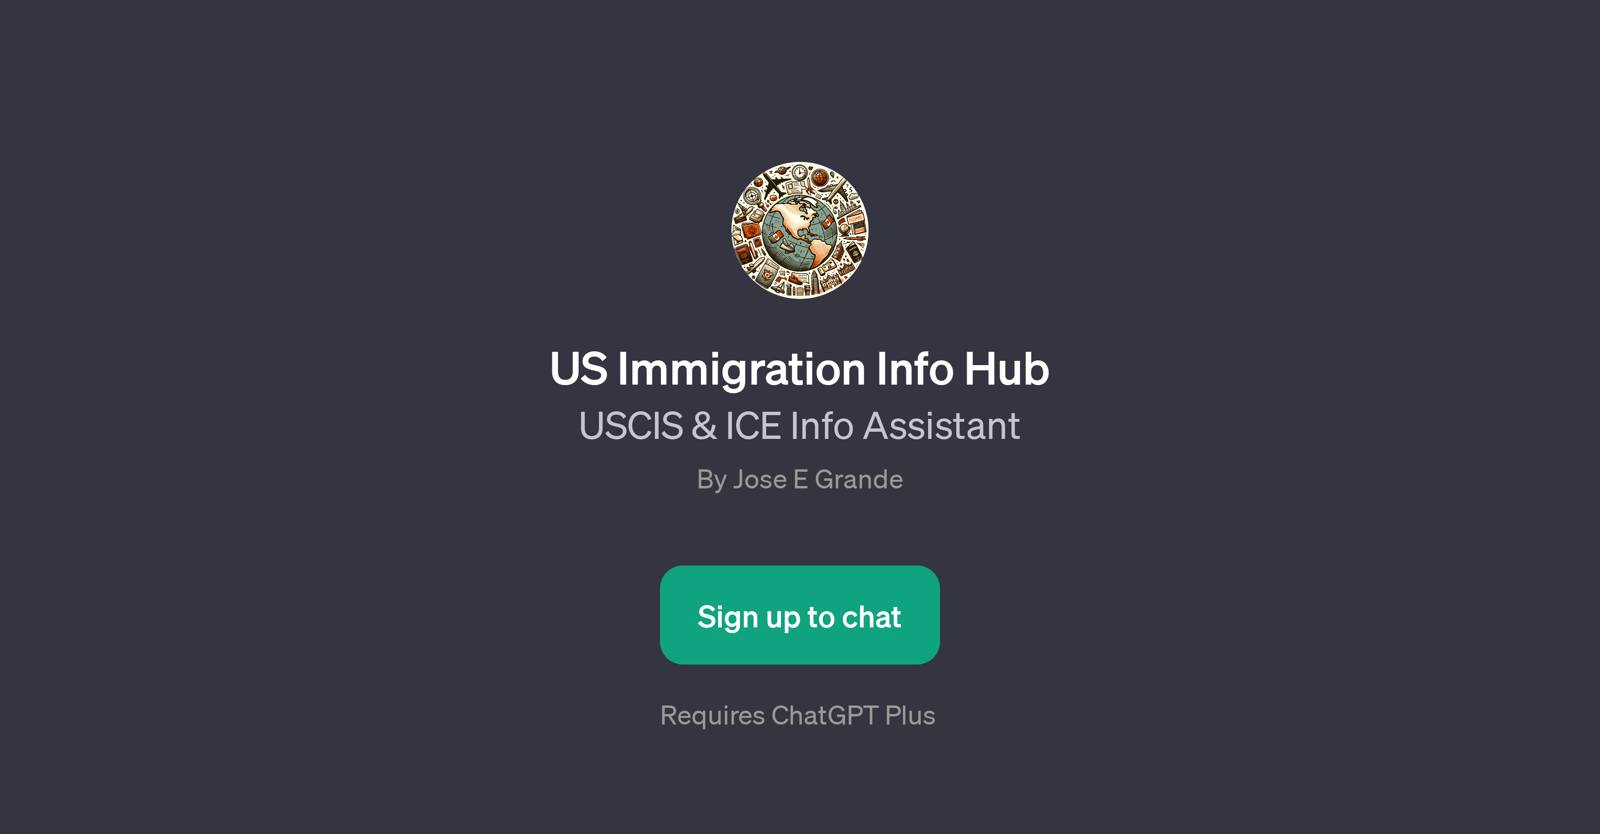 US Immigration Info Hub website